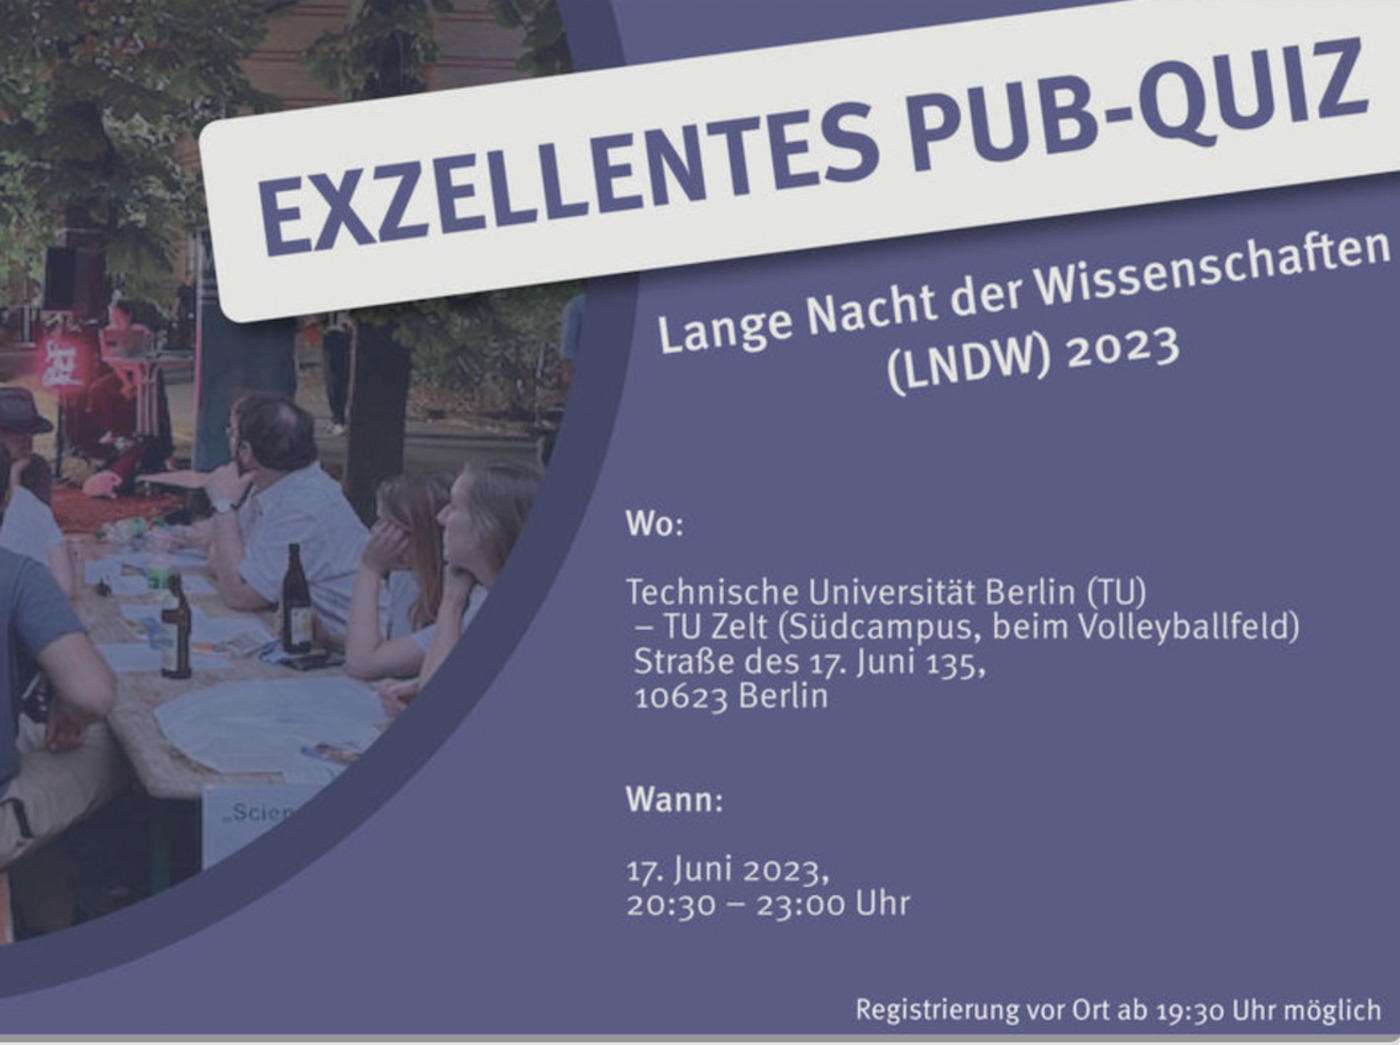 SCIoI participates in the Lange Nacht der Wissenschaften 2023 with an inter-cluster Pub Quiz at TU and a Lab Day at MAR